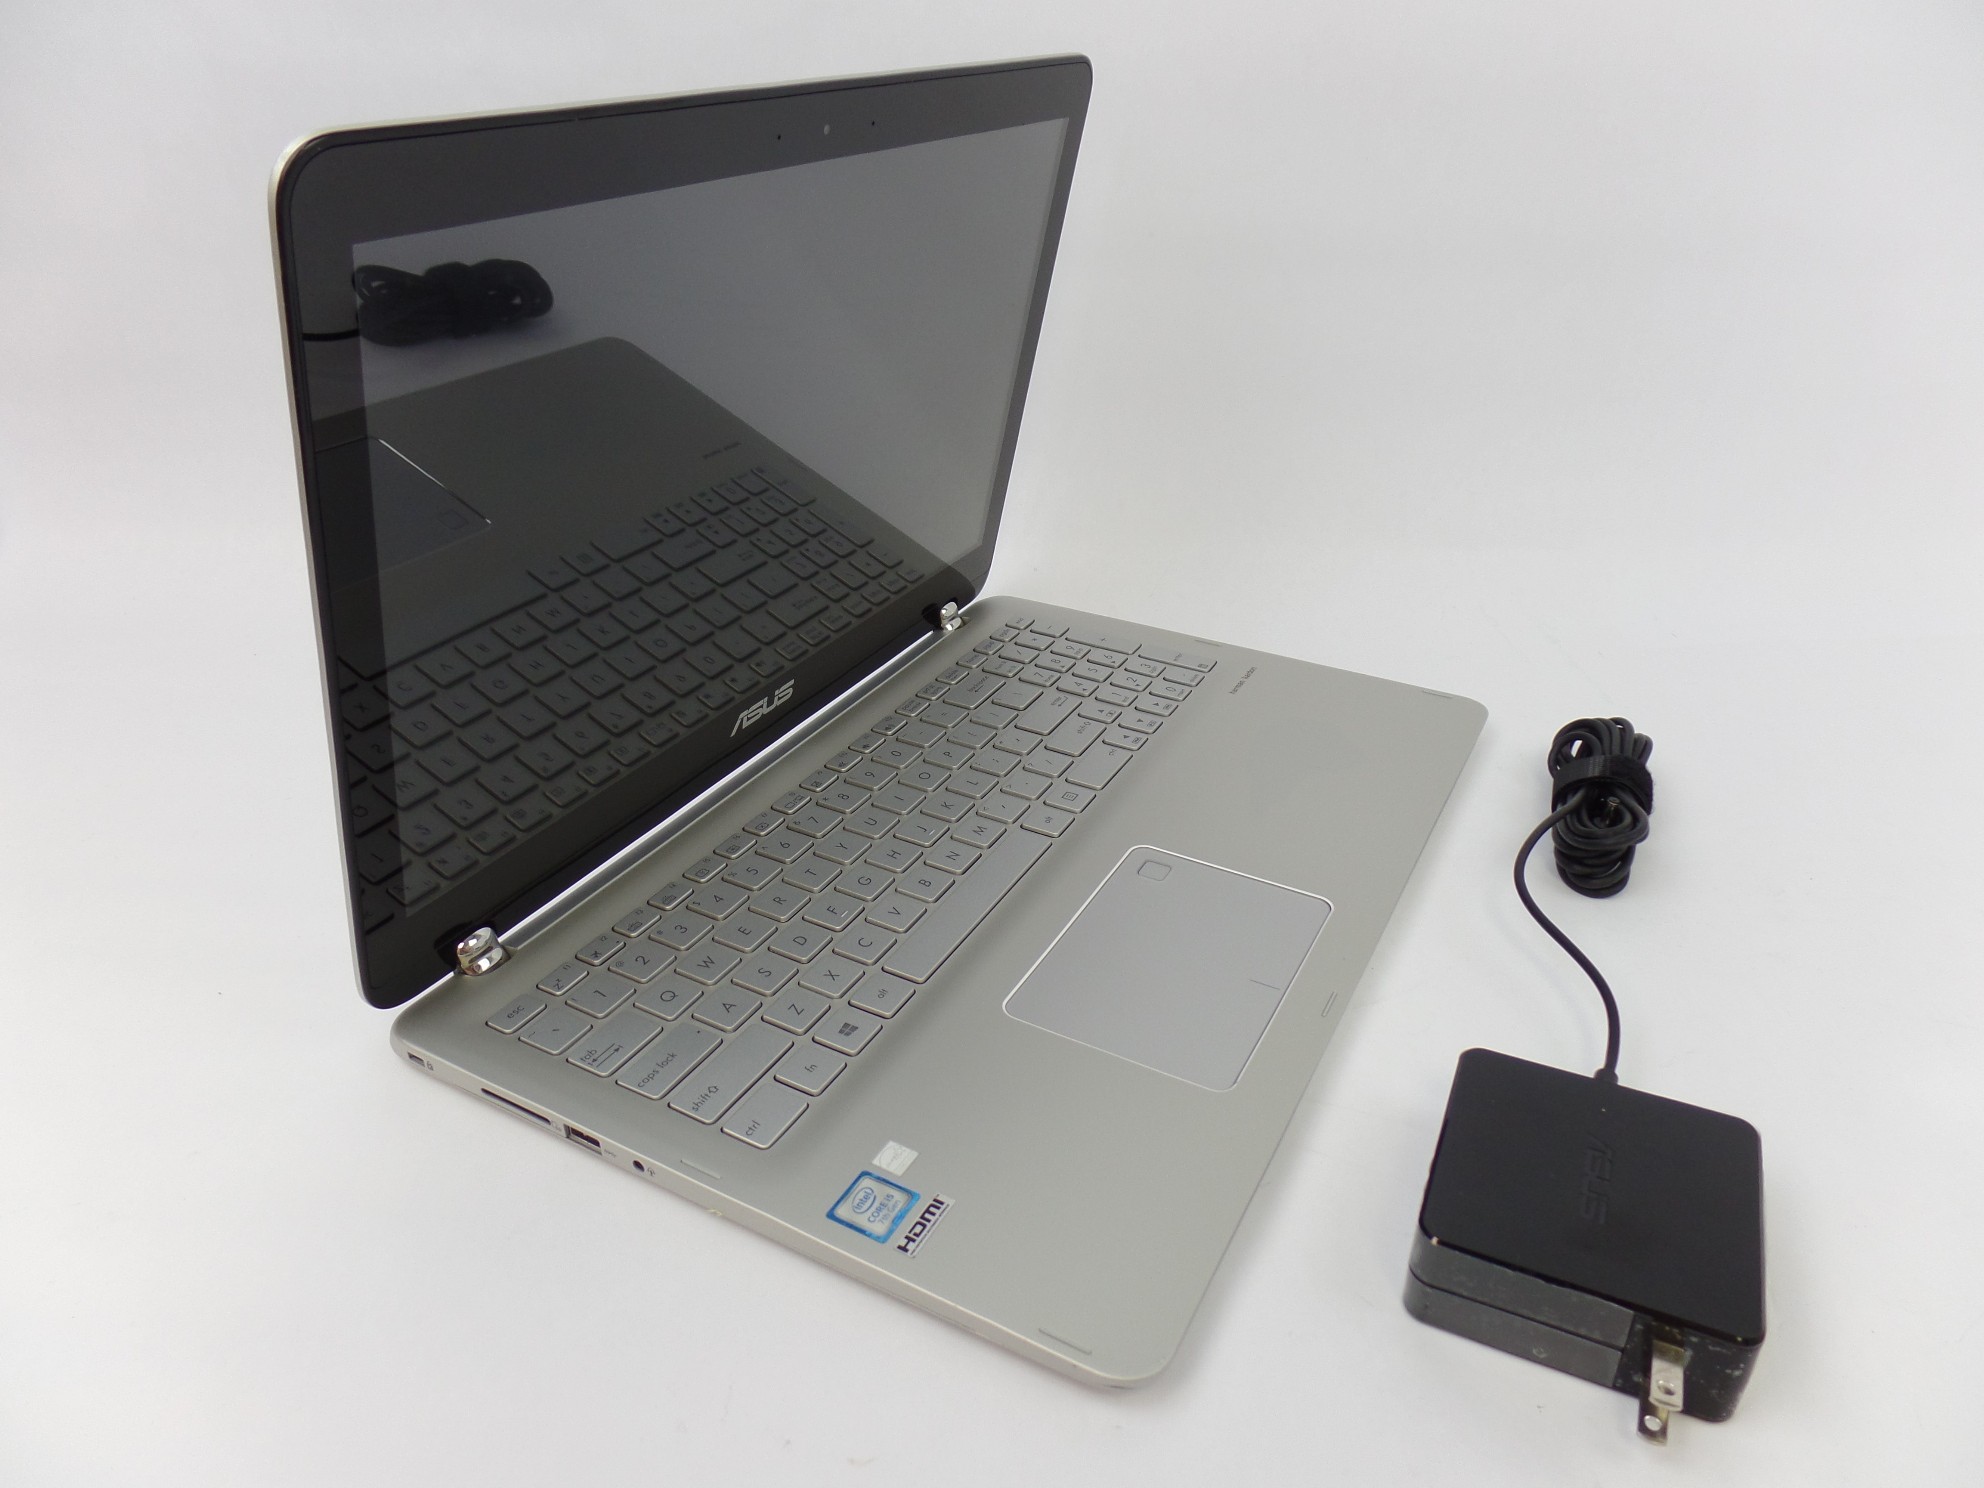 ASUS Q504U 15.6" FHD Touch i5-7200U 2.5GHz 12GB 1TB W10H 2in1 Convertible Laptop